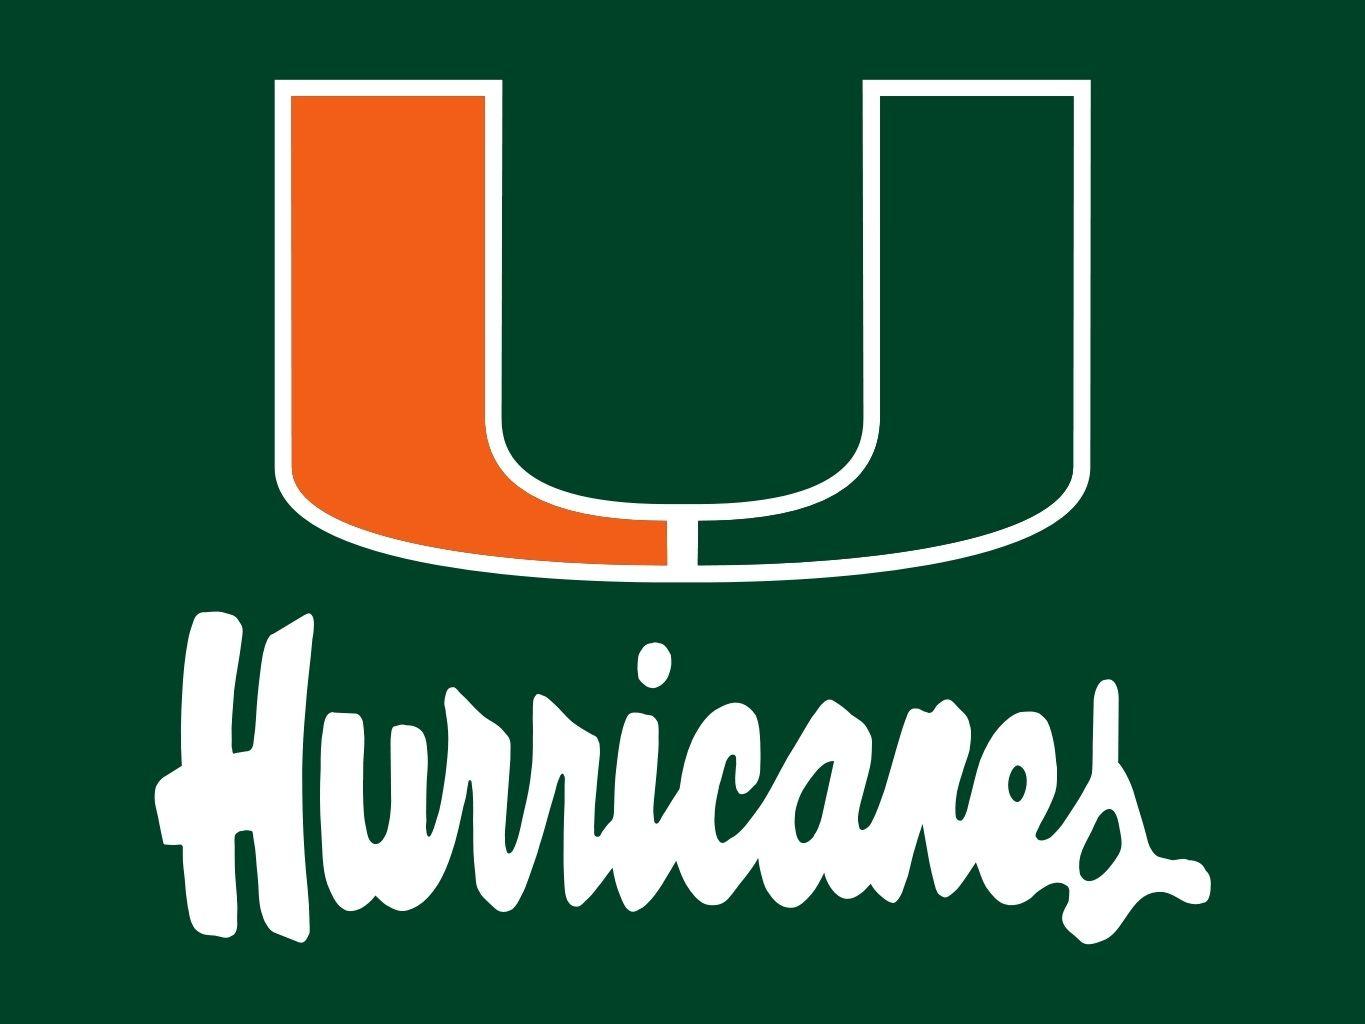 Miami Hurricanes Logo - Miami investigation lawyer says she's a 'patsy'. Miami Hurricanes